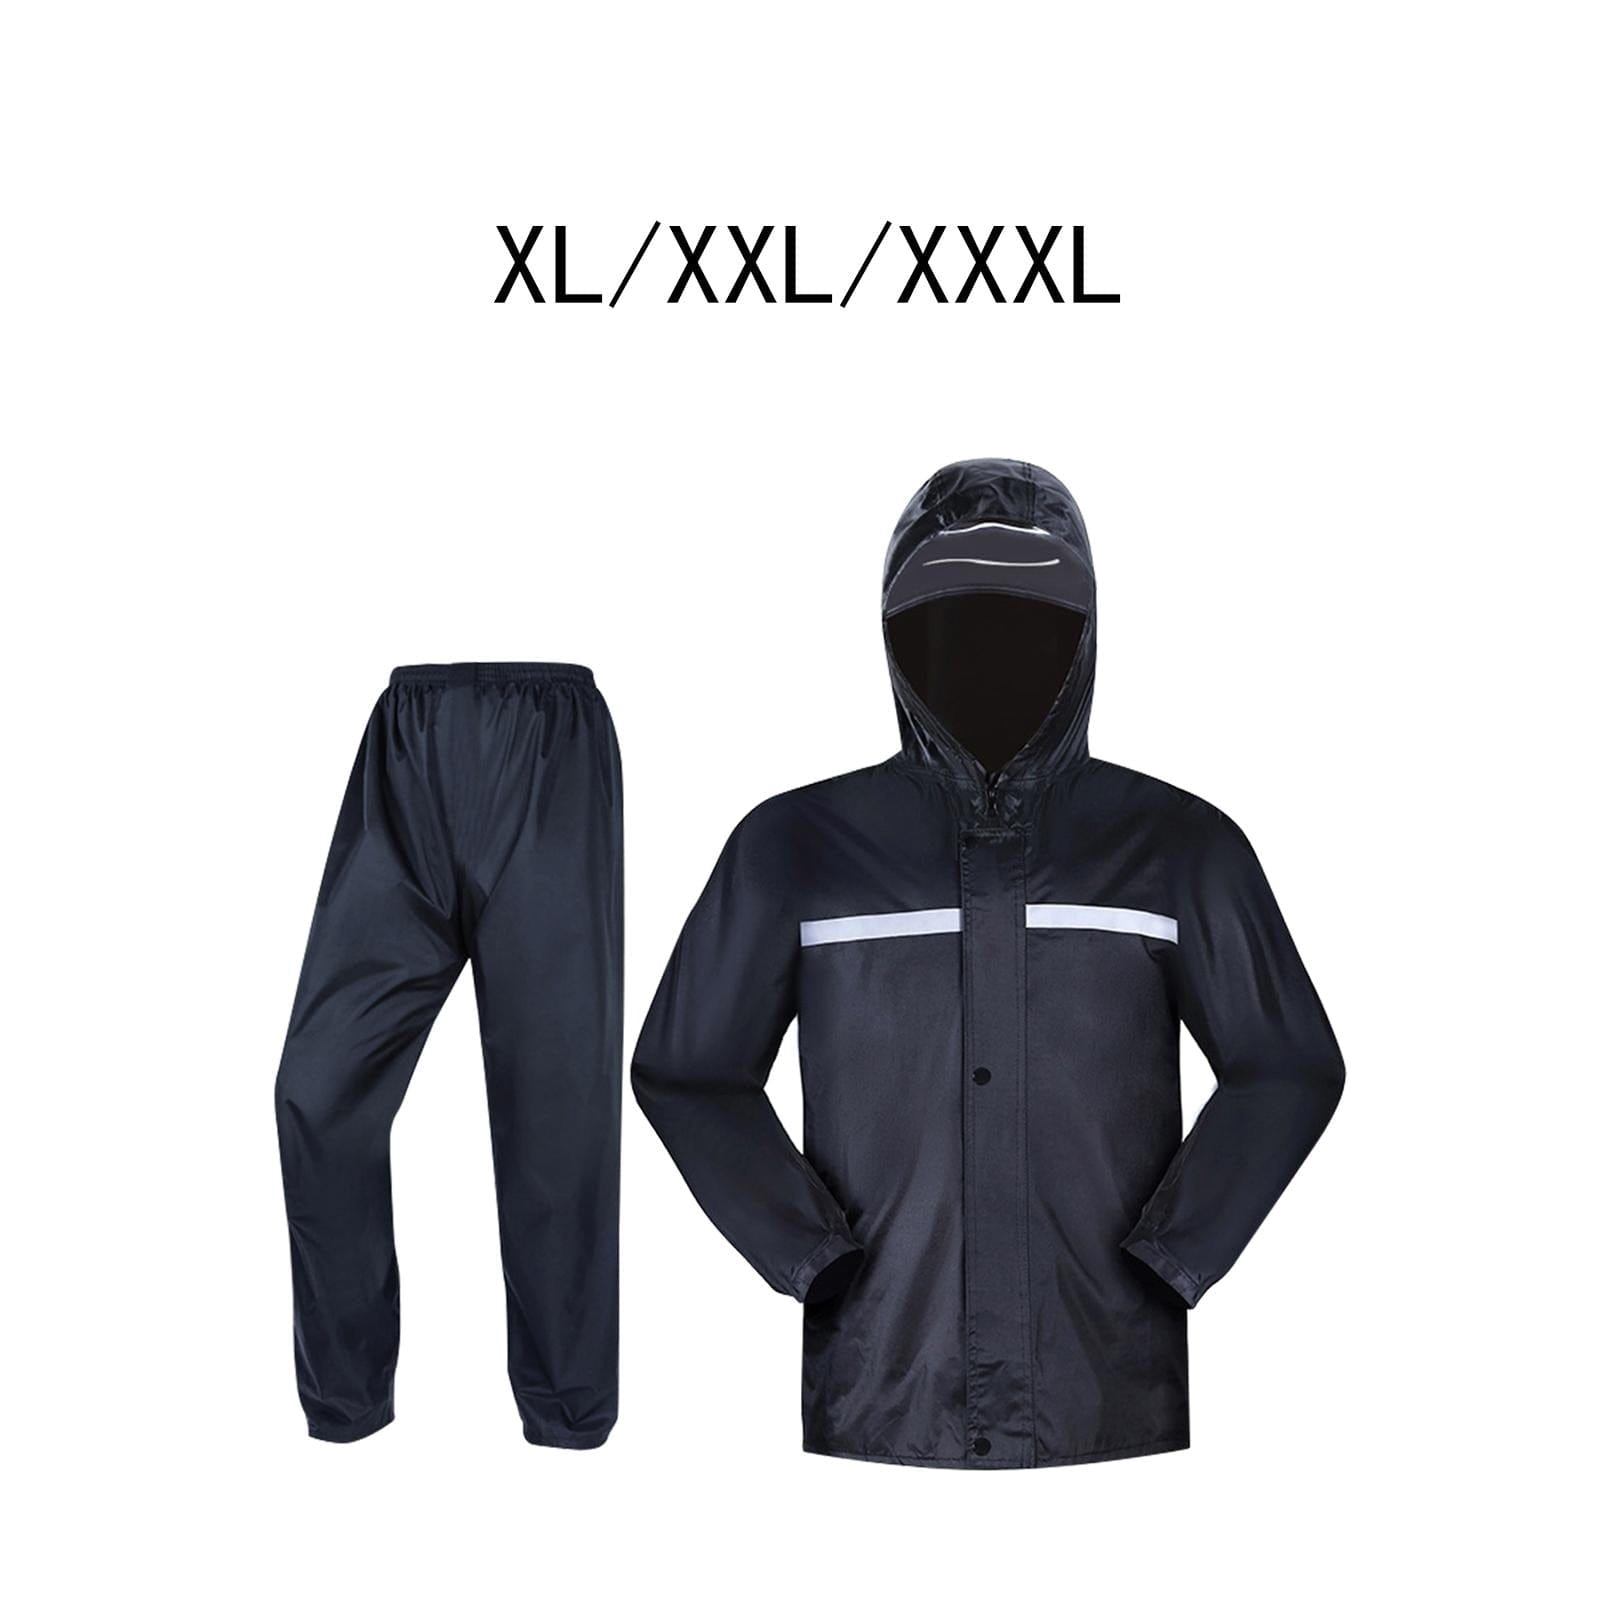 MIERSPORT Rain Suit Waterproof Jacket Breathable Rain Coat Pants Adults Women Men, XXXL